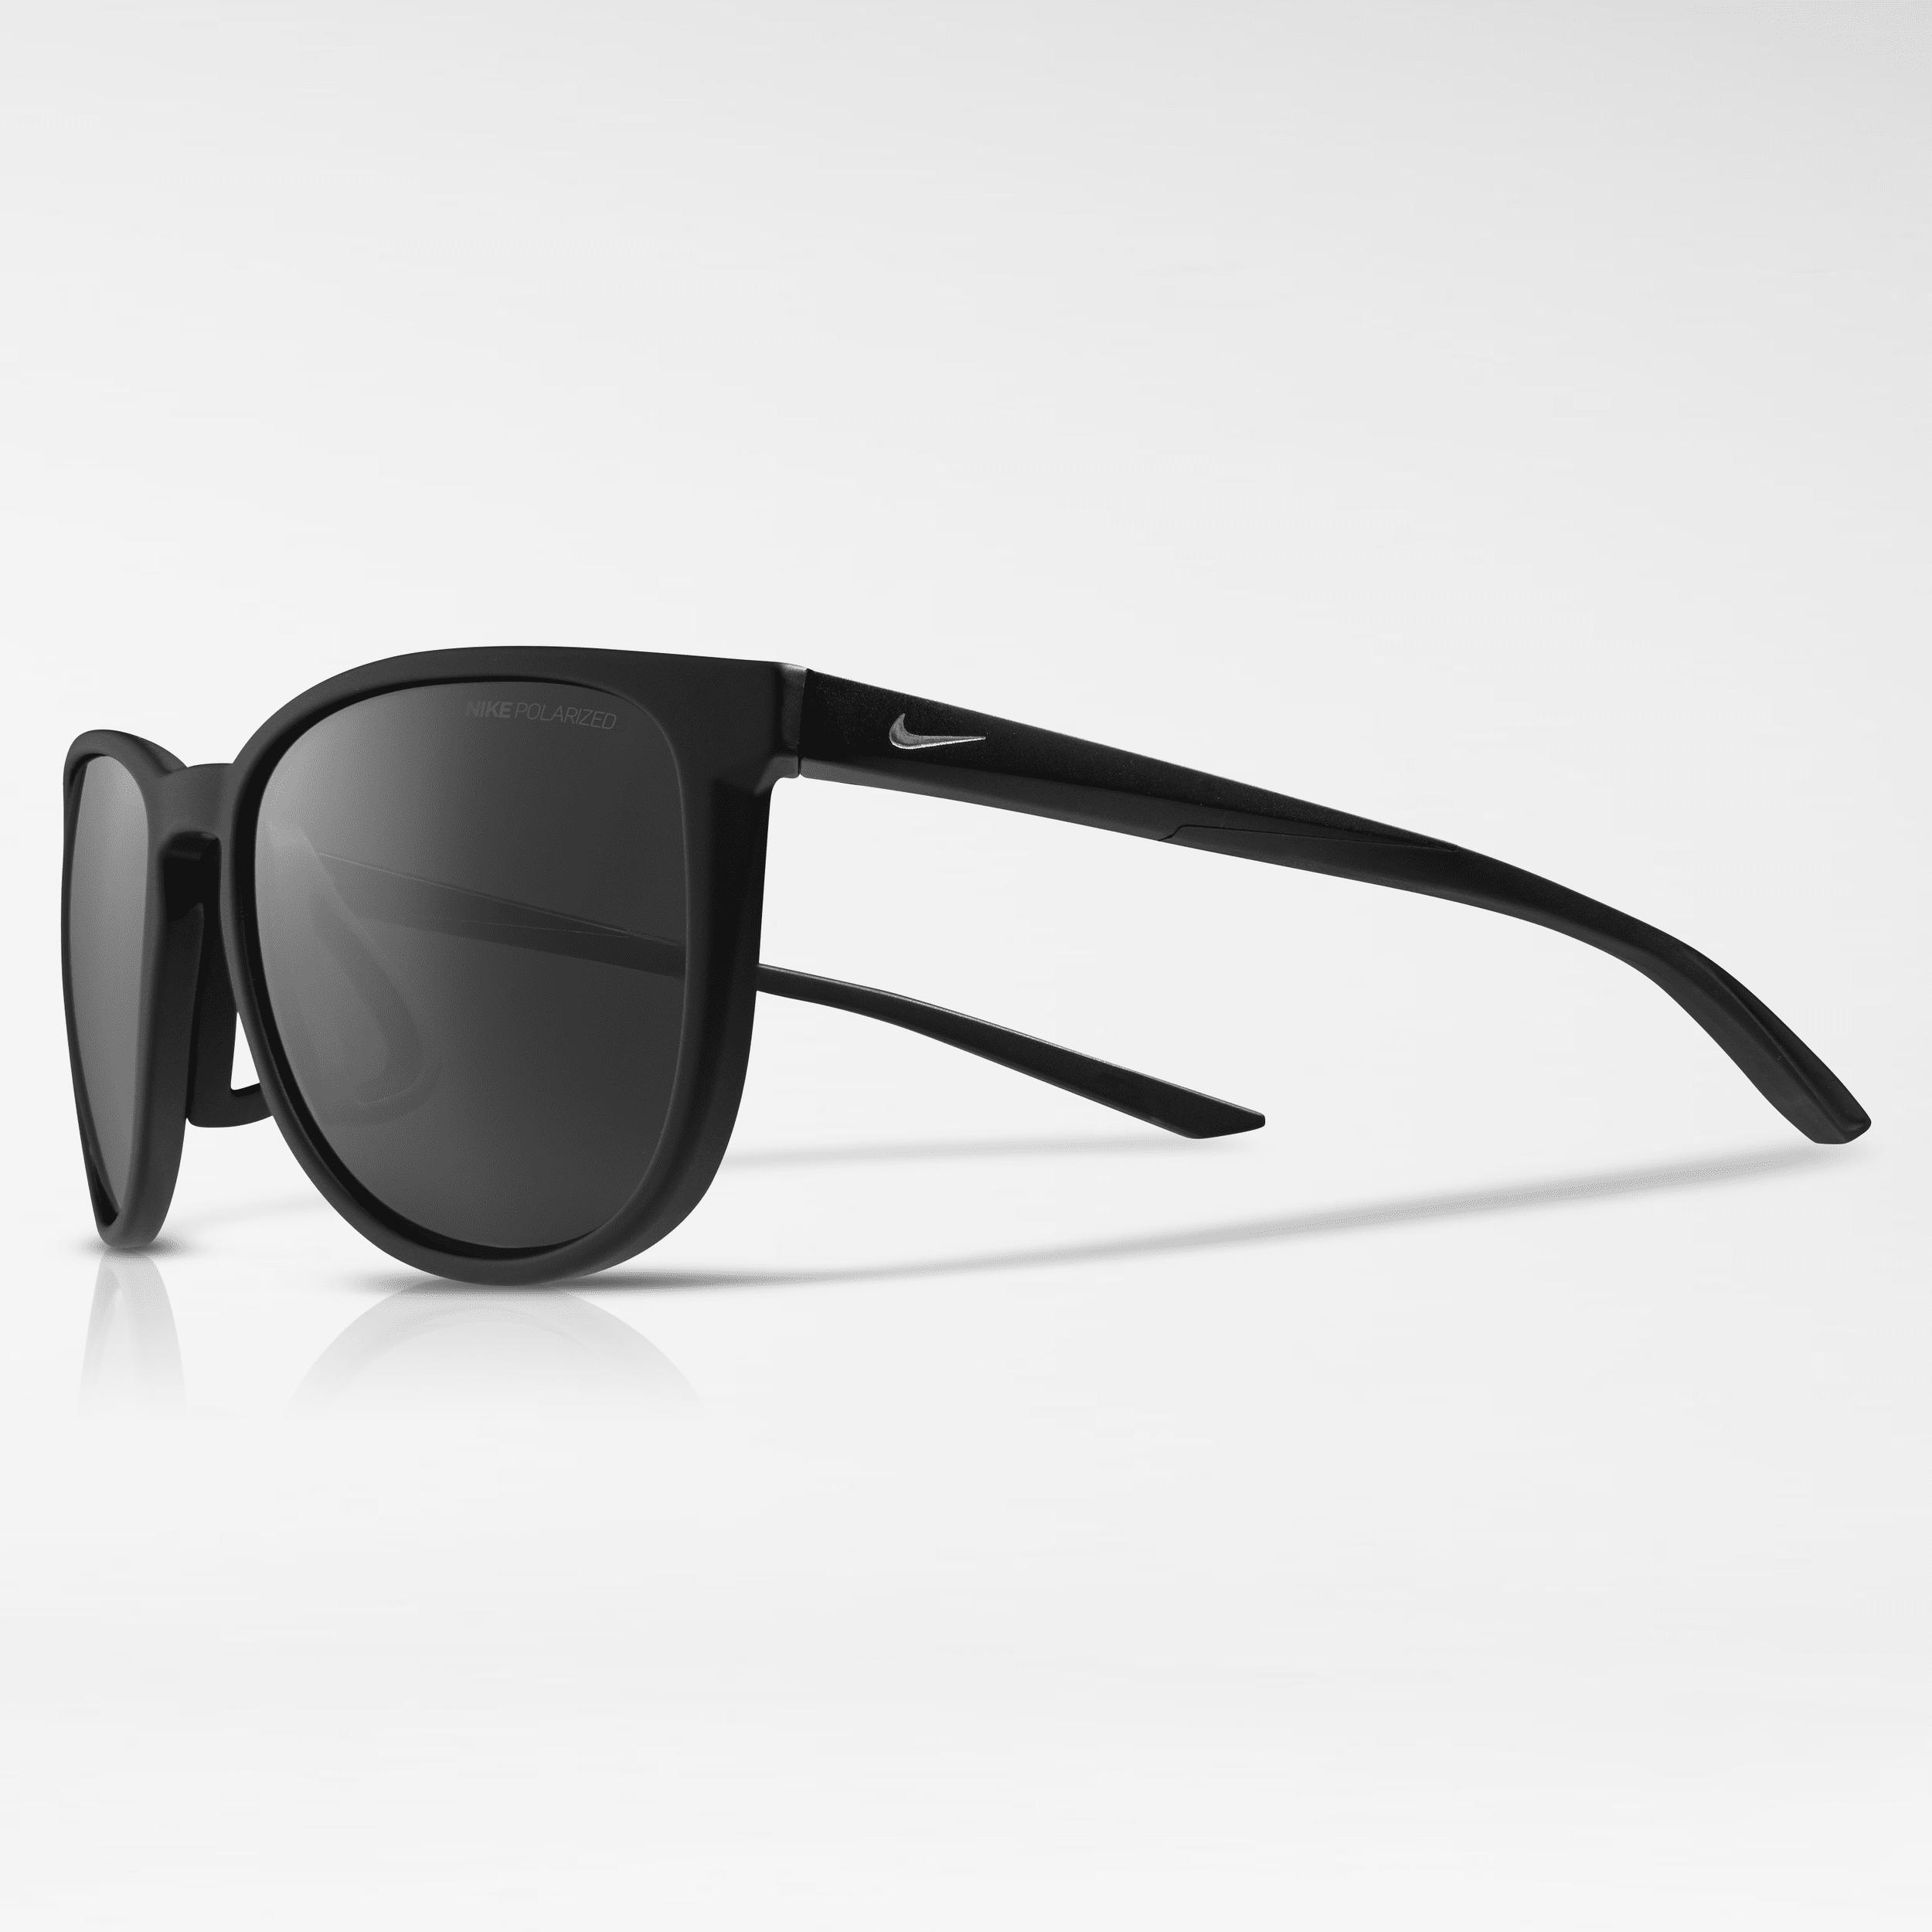 Nike Women's Cool Down Polarized Sunglasses Product Image